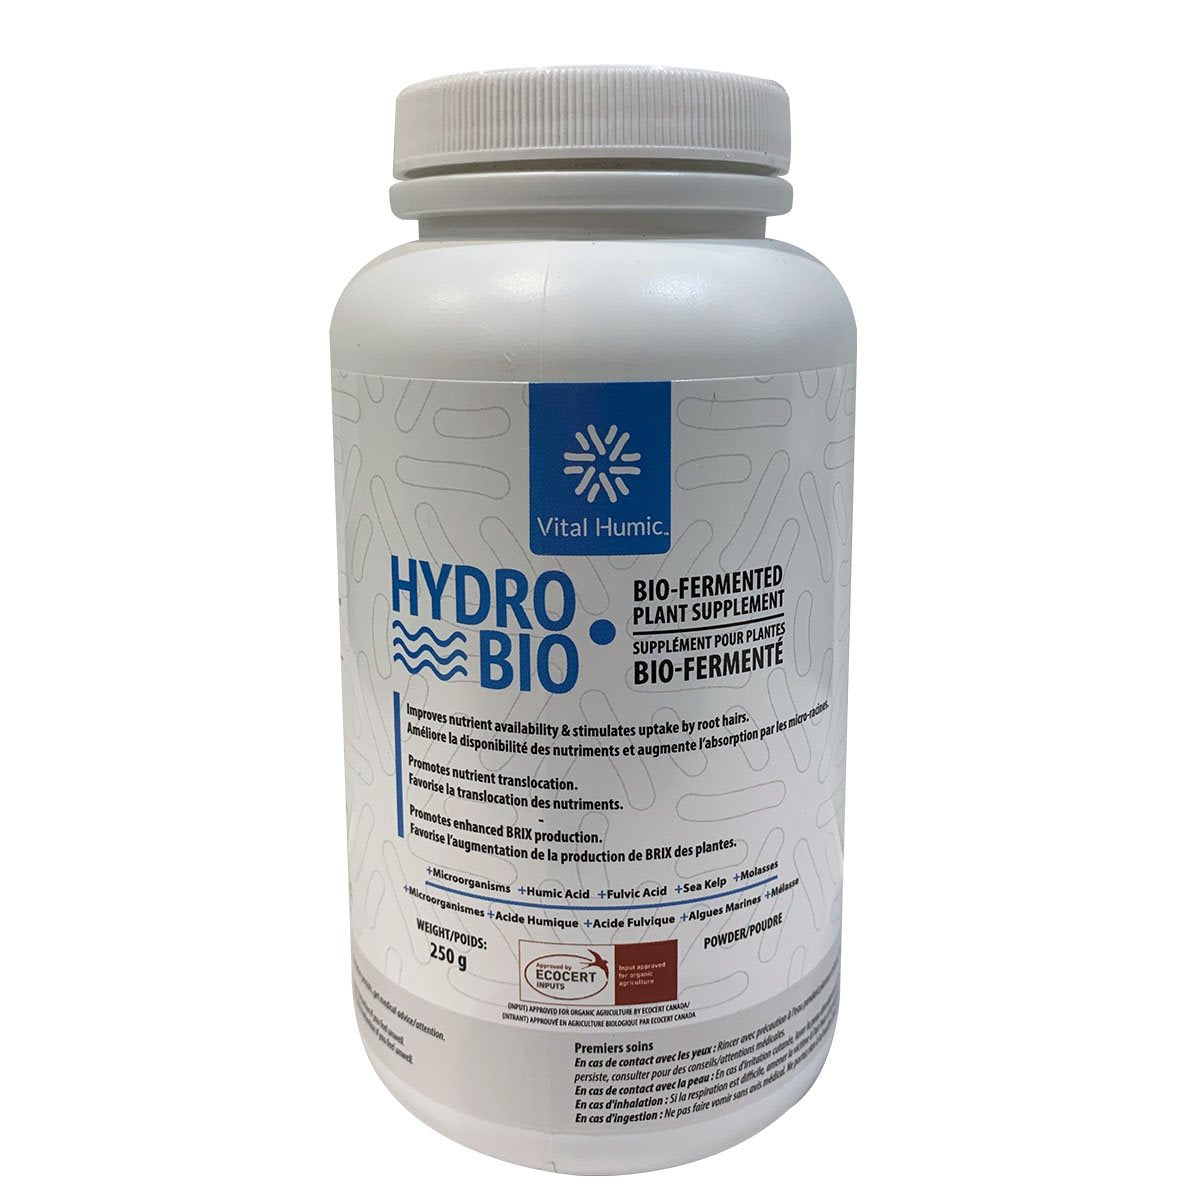 Product Secondary Image:Vital Humic ™ Hydro Bio - Microbial Biostimulants